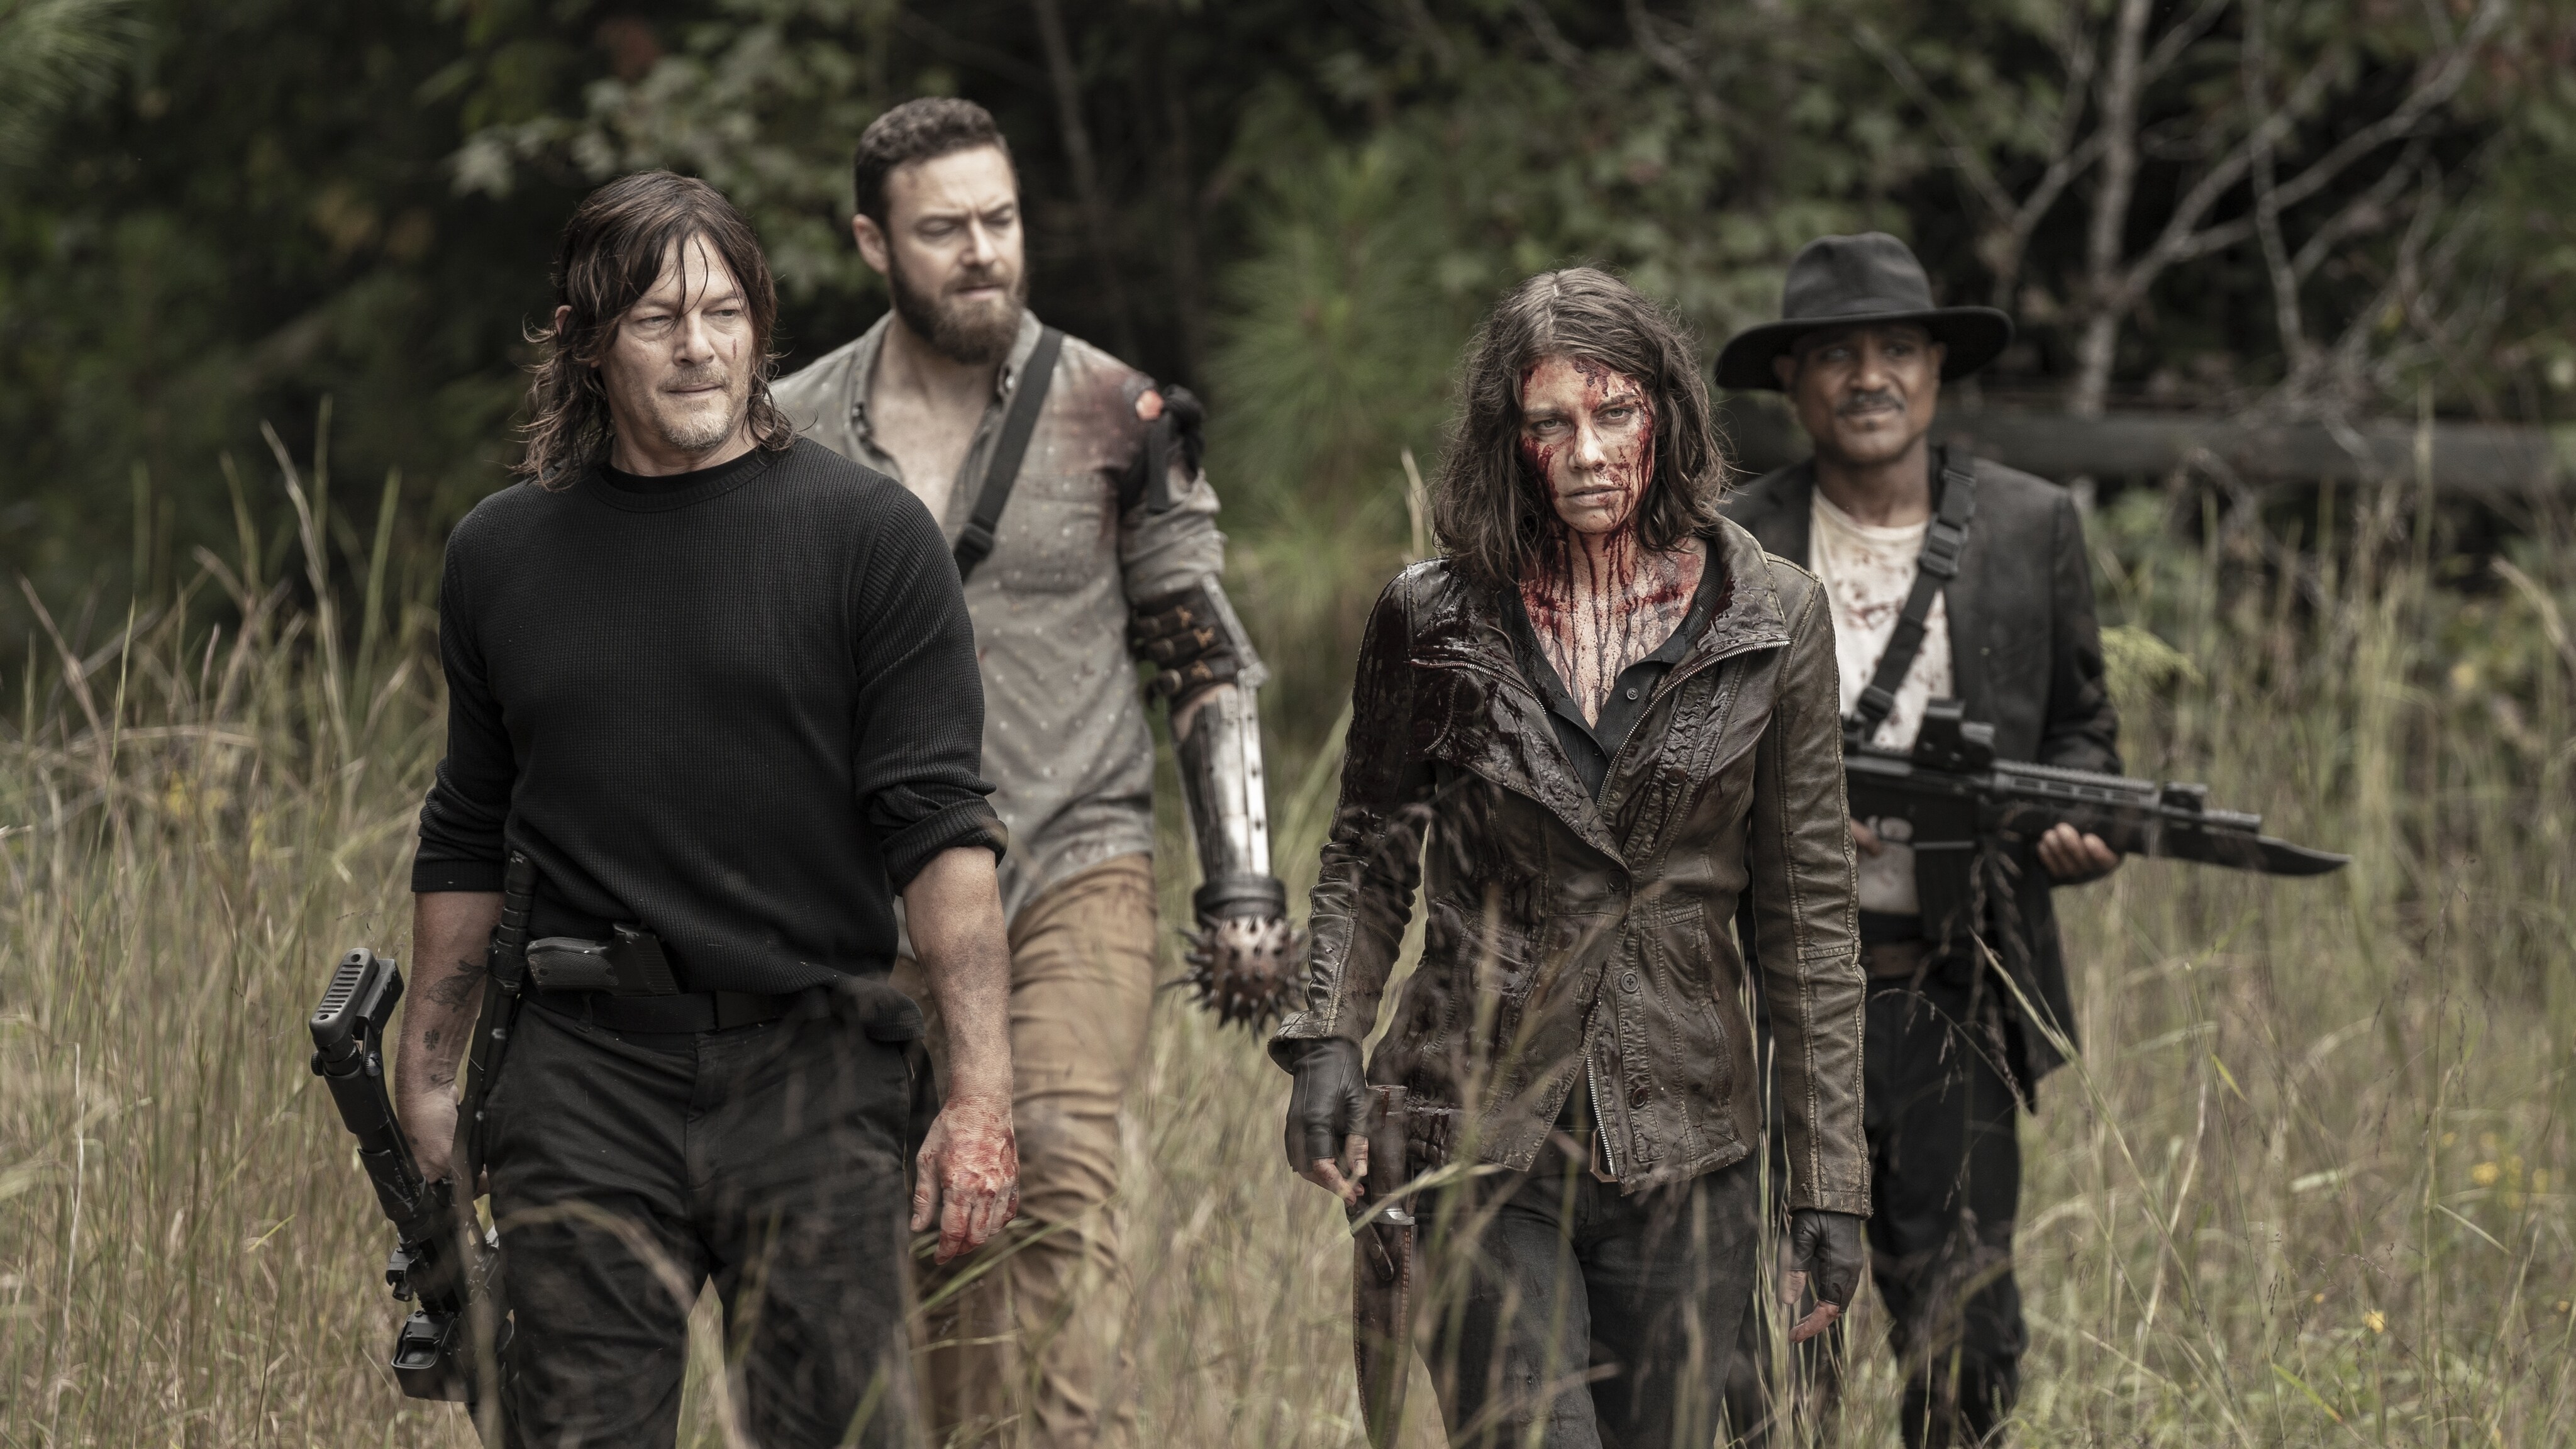 Resumo de The Walking Dead: os 10 momentos marcantes da história antes do final da série